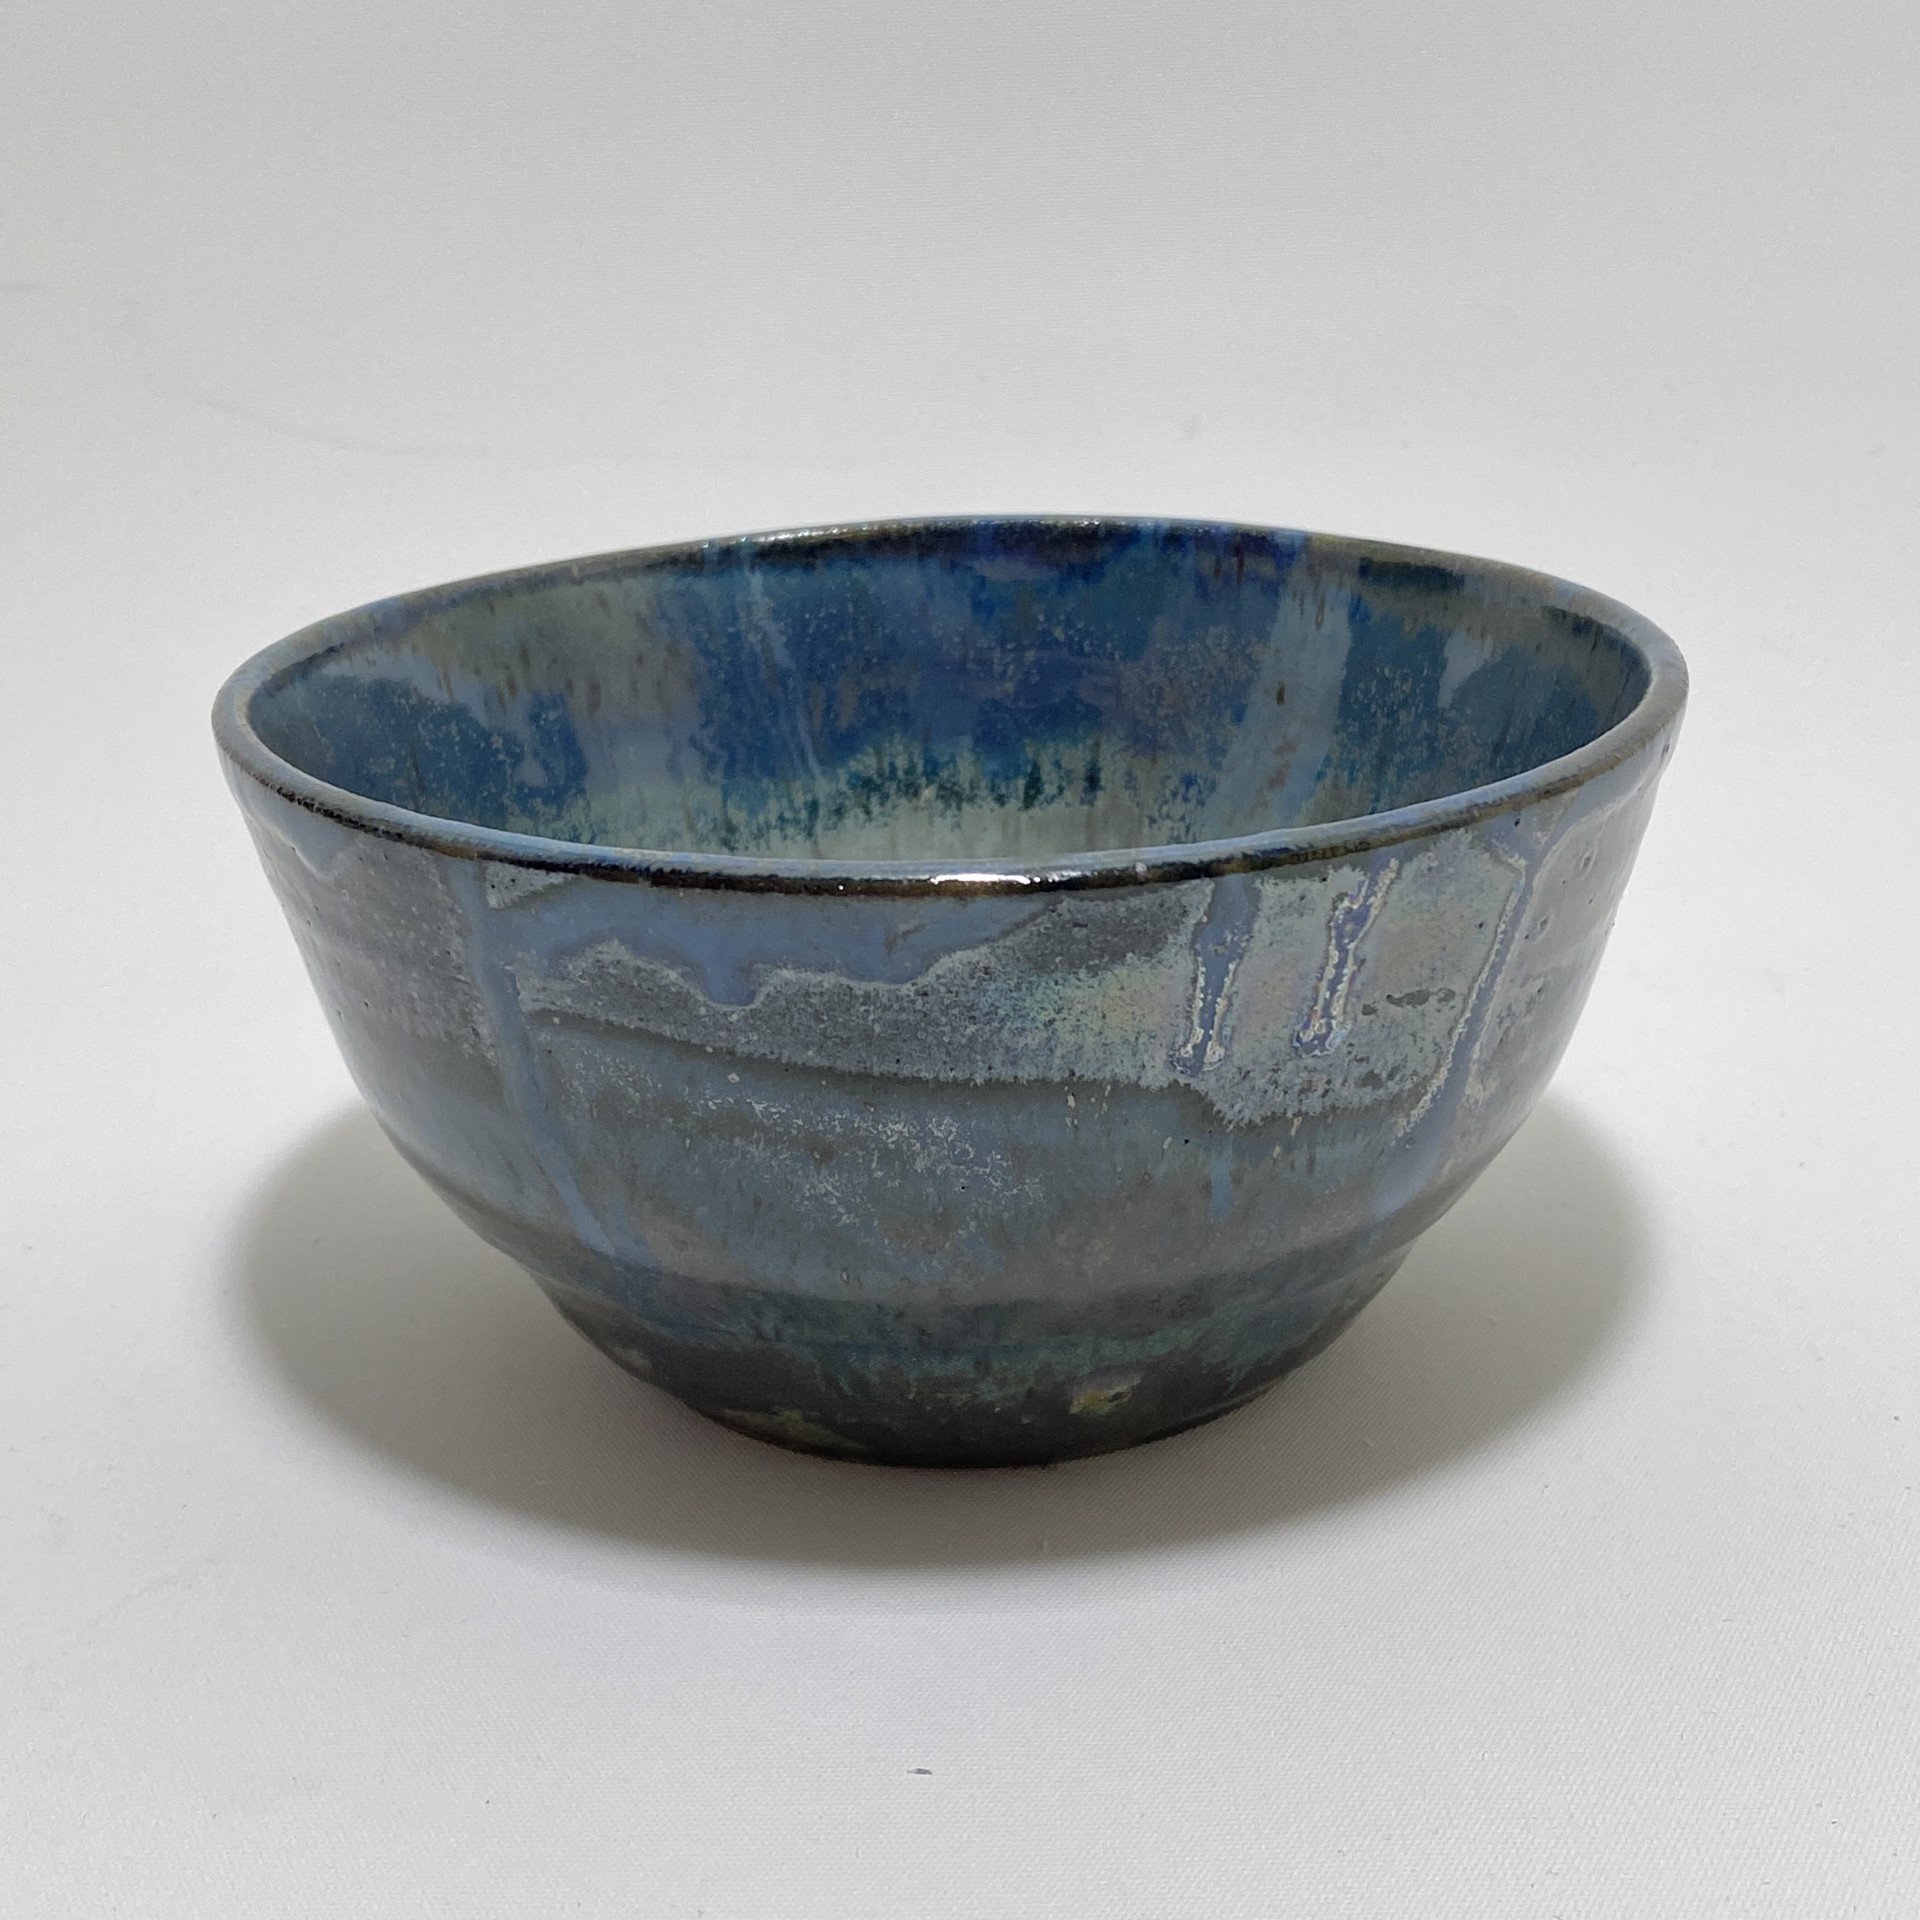 "Sm. Dark Blue Metallic Bowl" by Justin S. by One Step Beyond